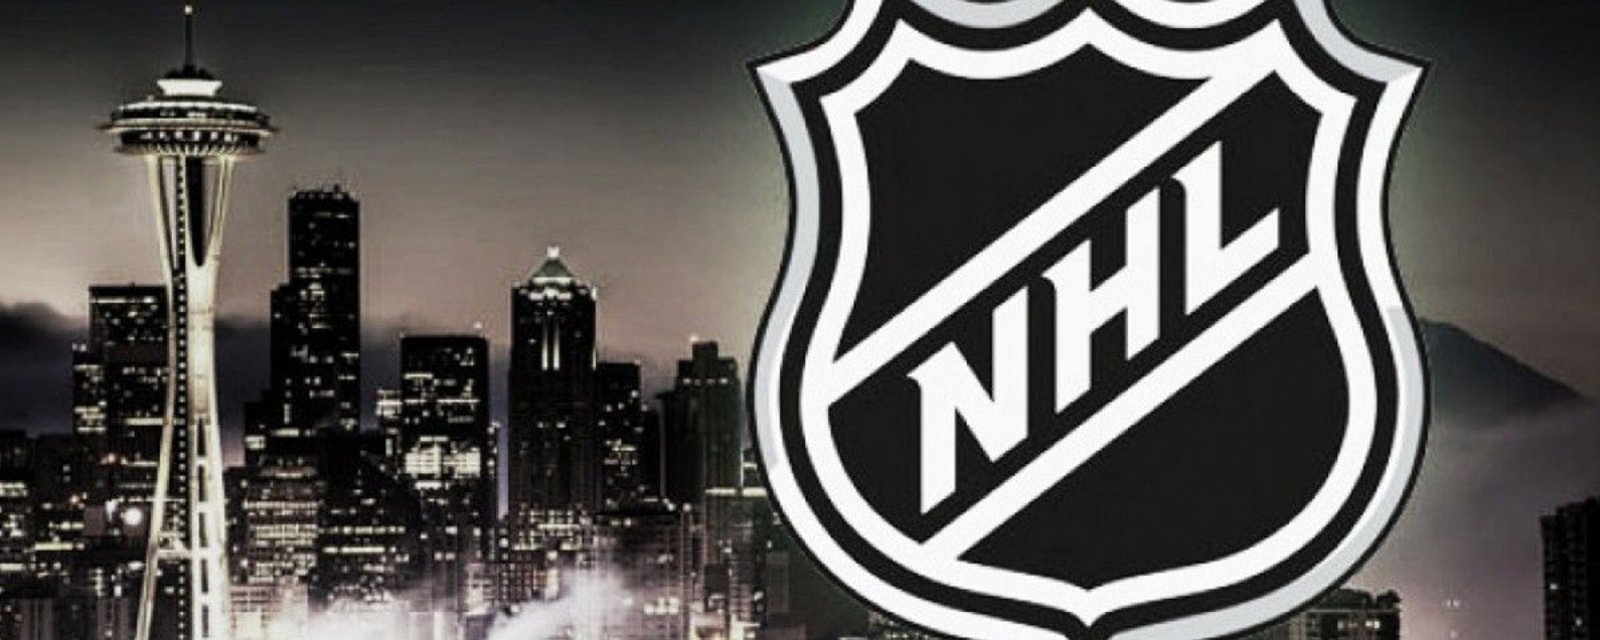 Logo details for Seattle NHL team leaked!?